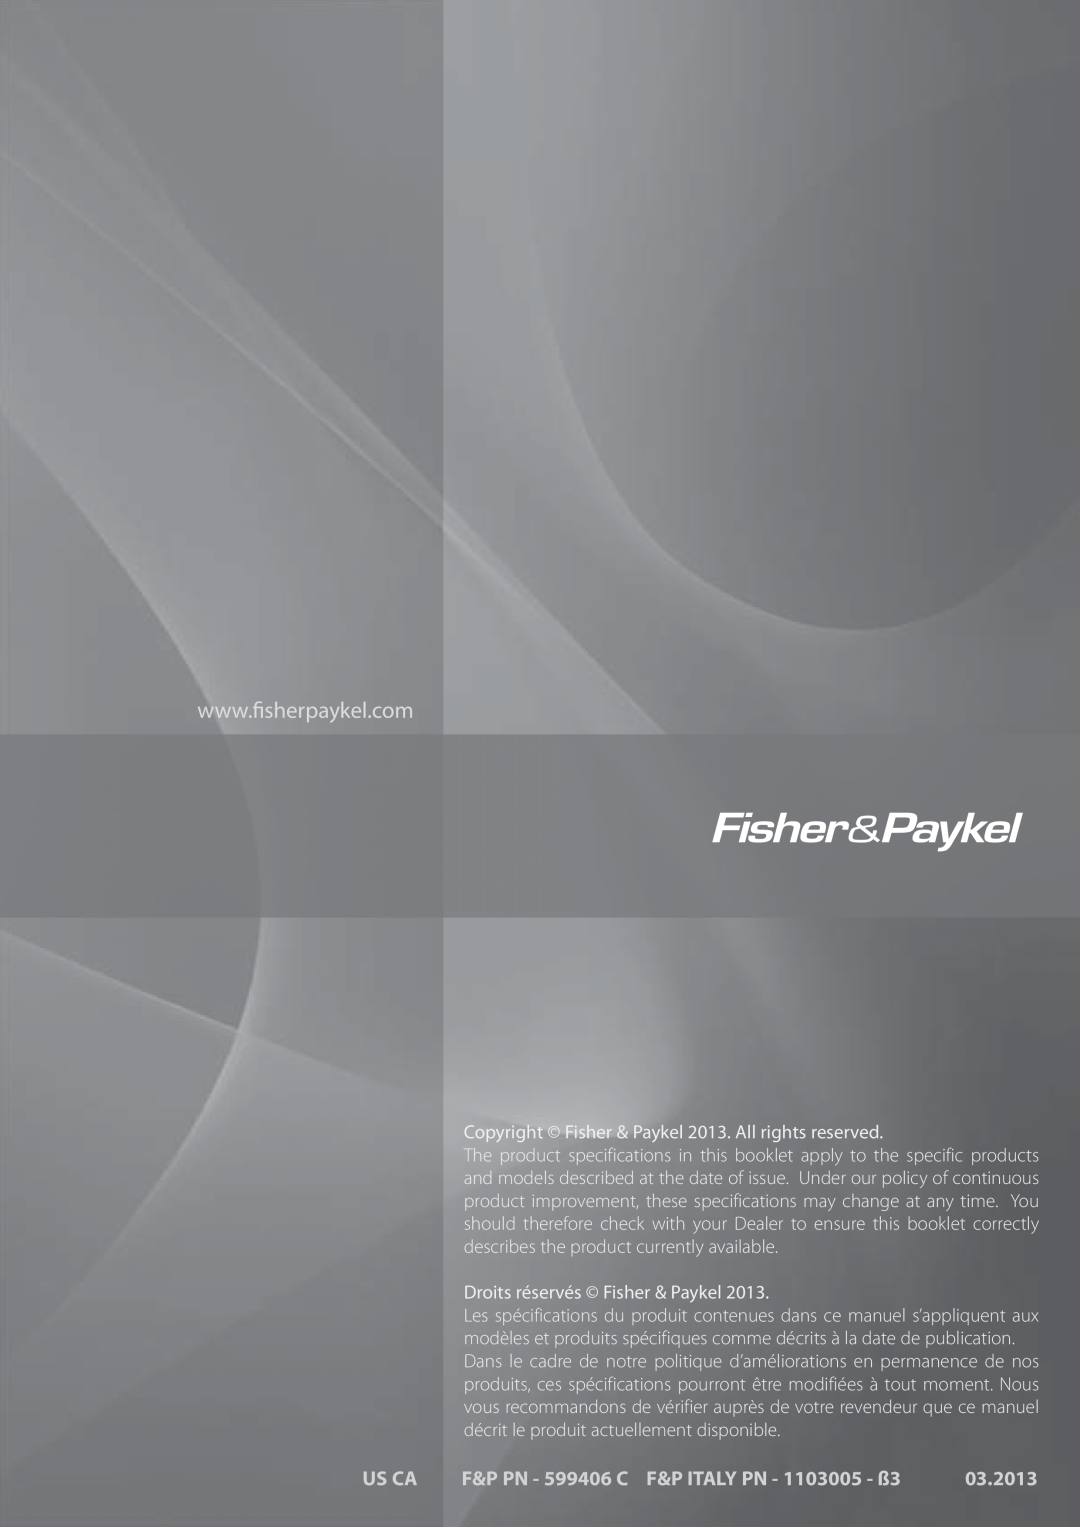 Fisher & Paykel OB24SDPX Us Ca, F&P PN - 599406 C F&P ITALY PN - 1103005 - ß3, 03.2013, Droits réservés Fisher & Paykel 